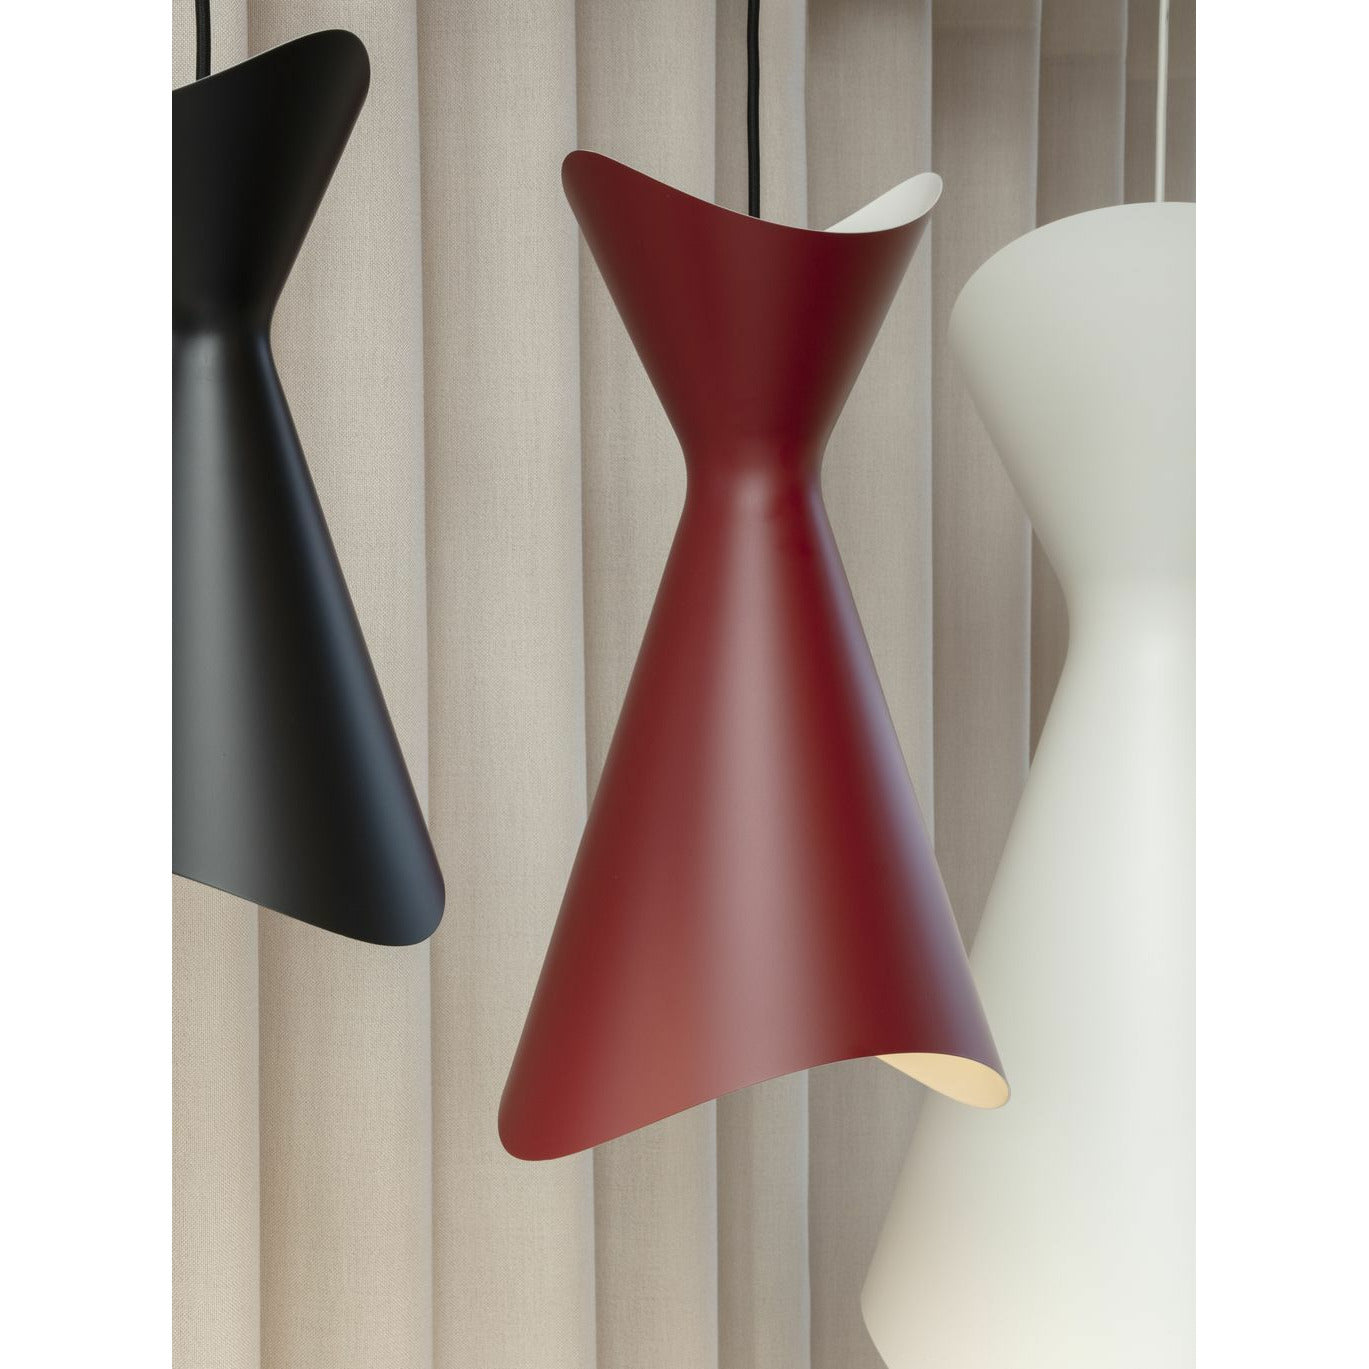 Lyfa Ninotchka hanger 42,5 cm, rood